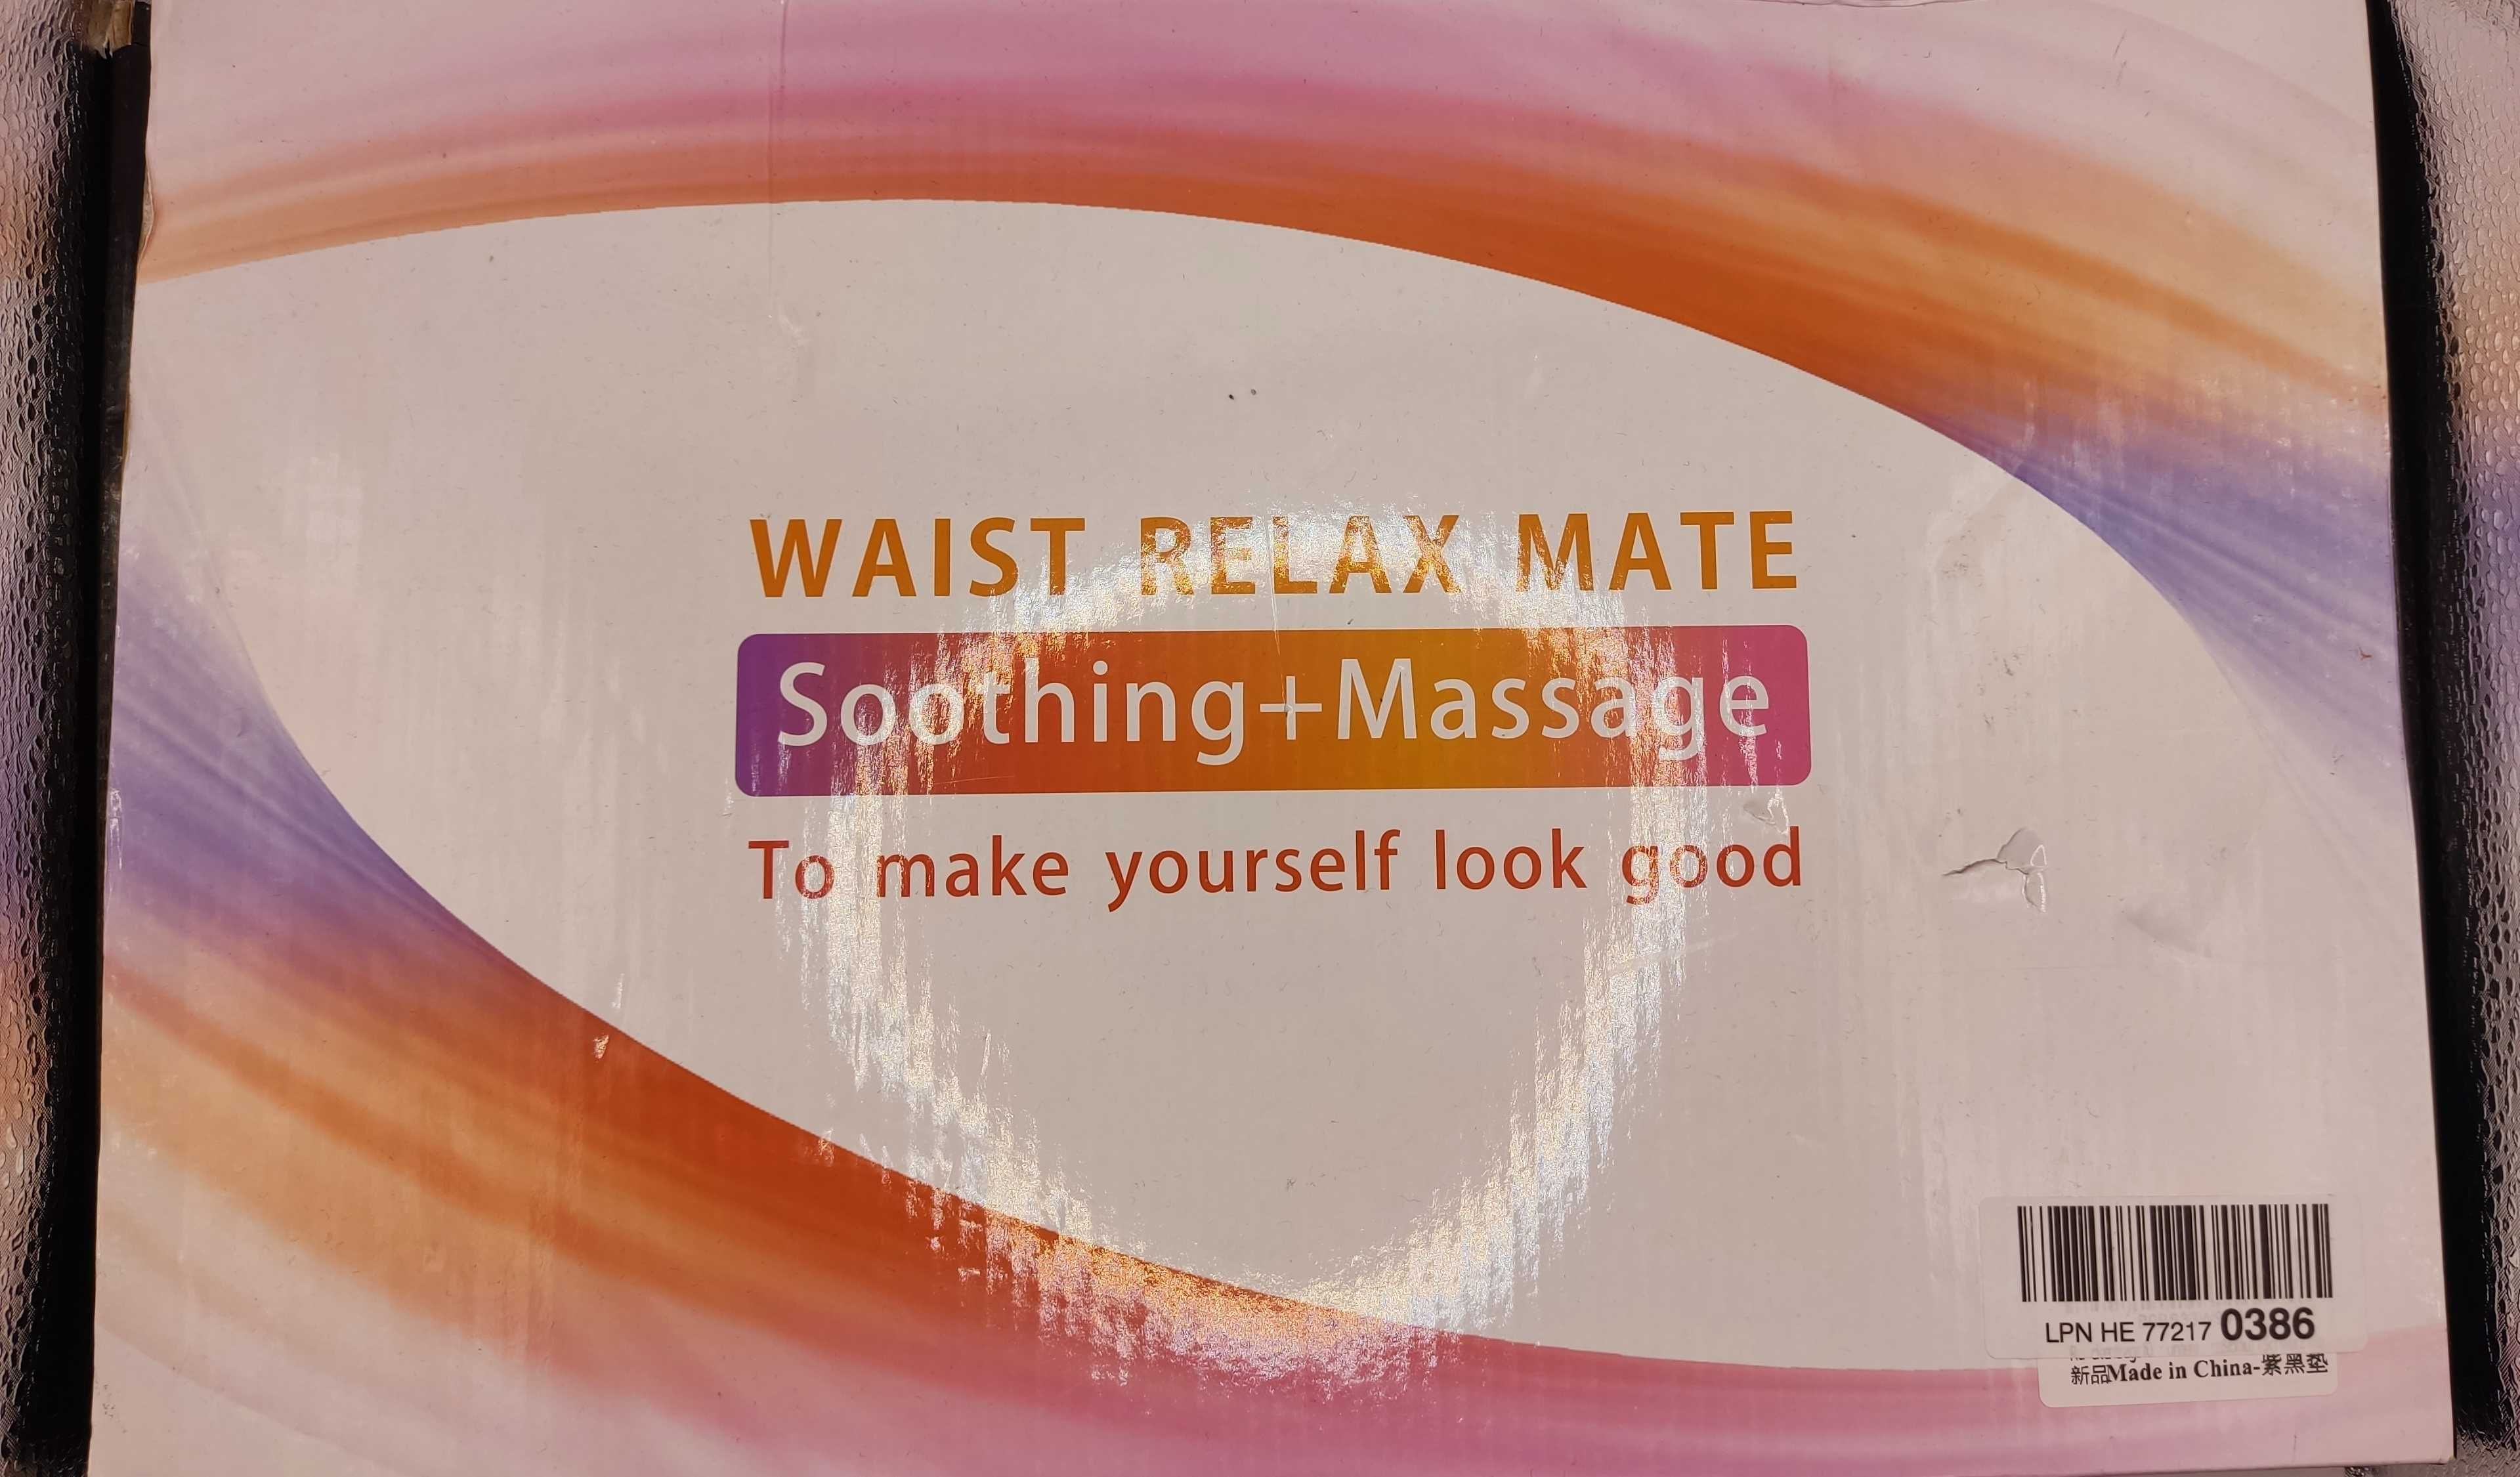 Soothing+Massage Waist Relax Mate - podkładka kojąca na ból pleców